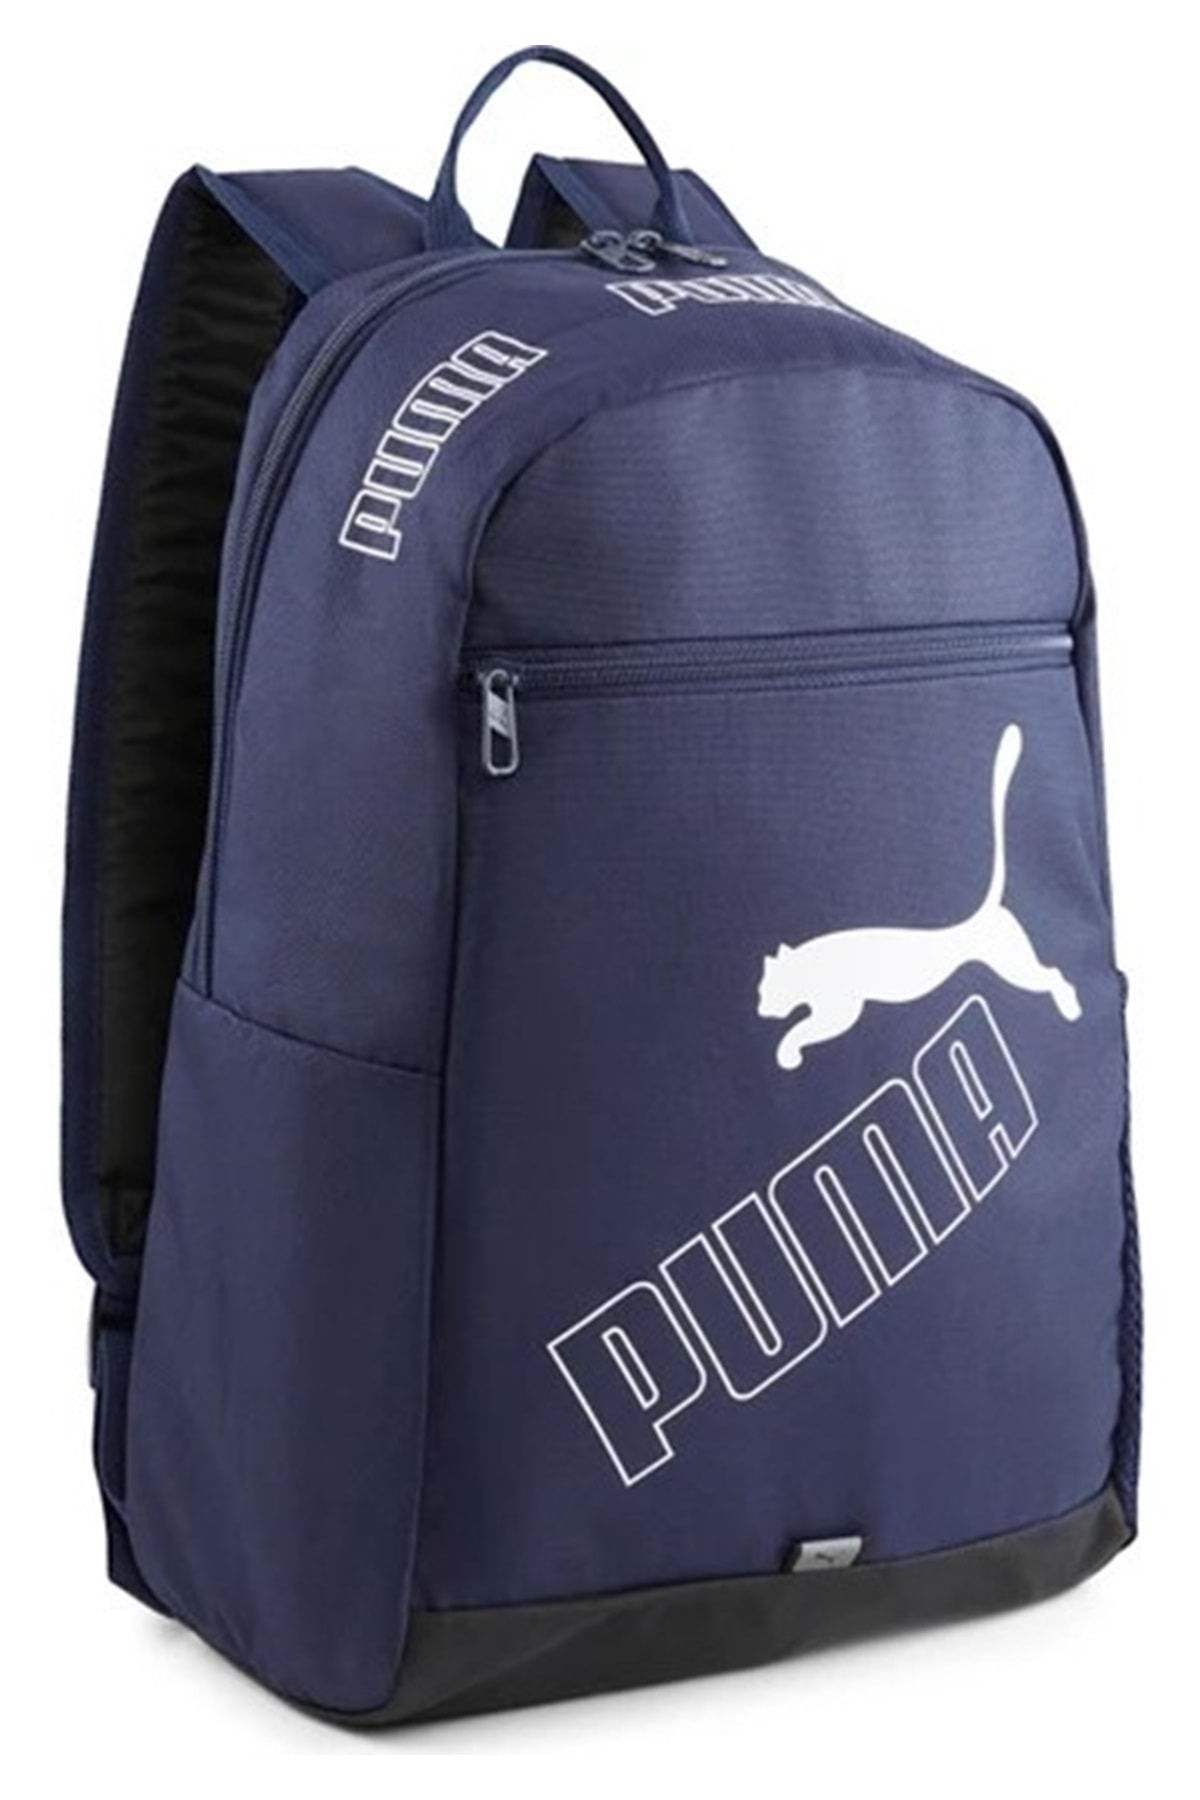 Puma Phase Backpack Iı 0772295-01 Unisex Sırt Çantası Lacivert